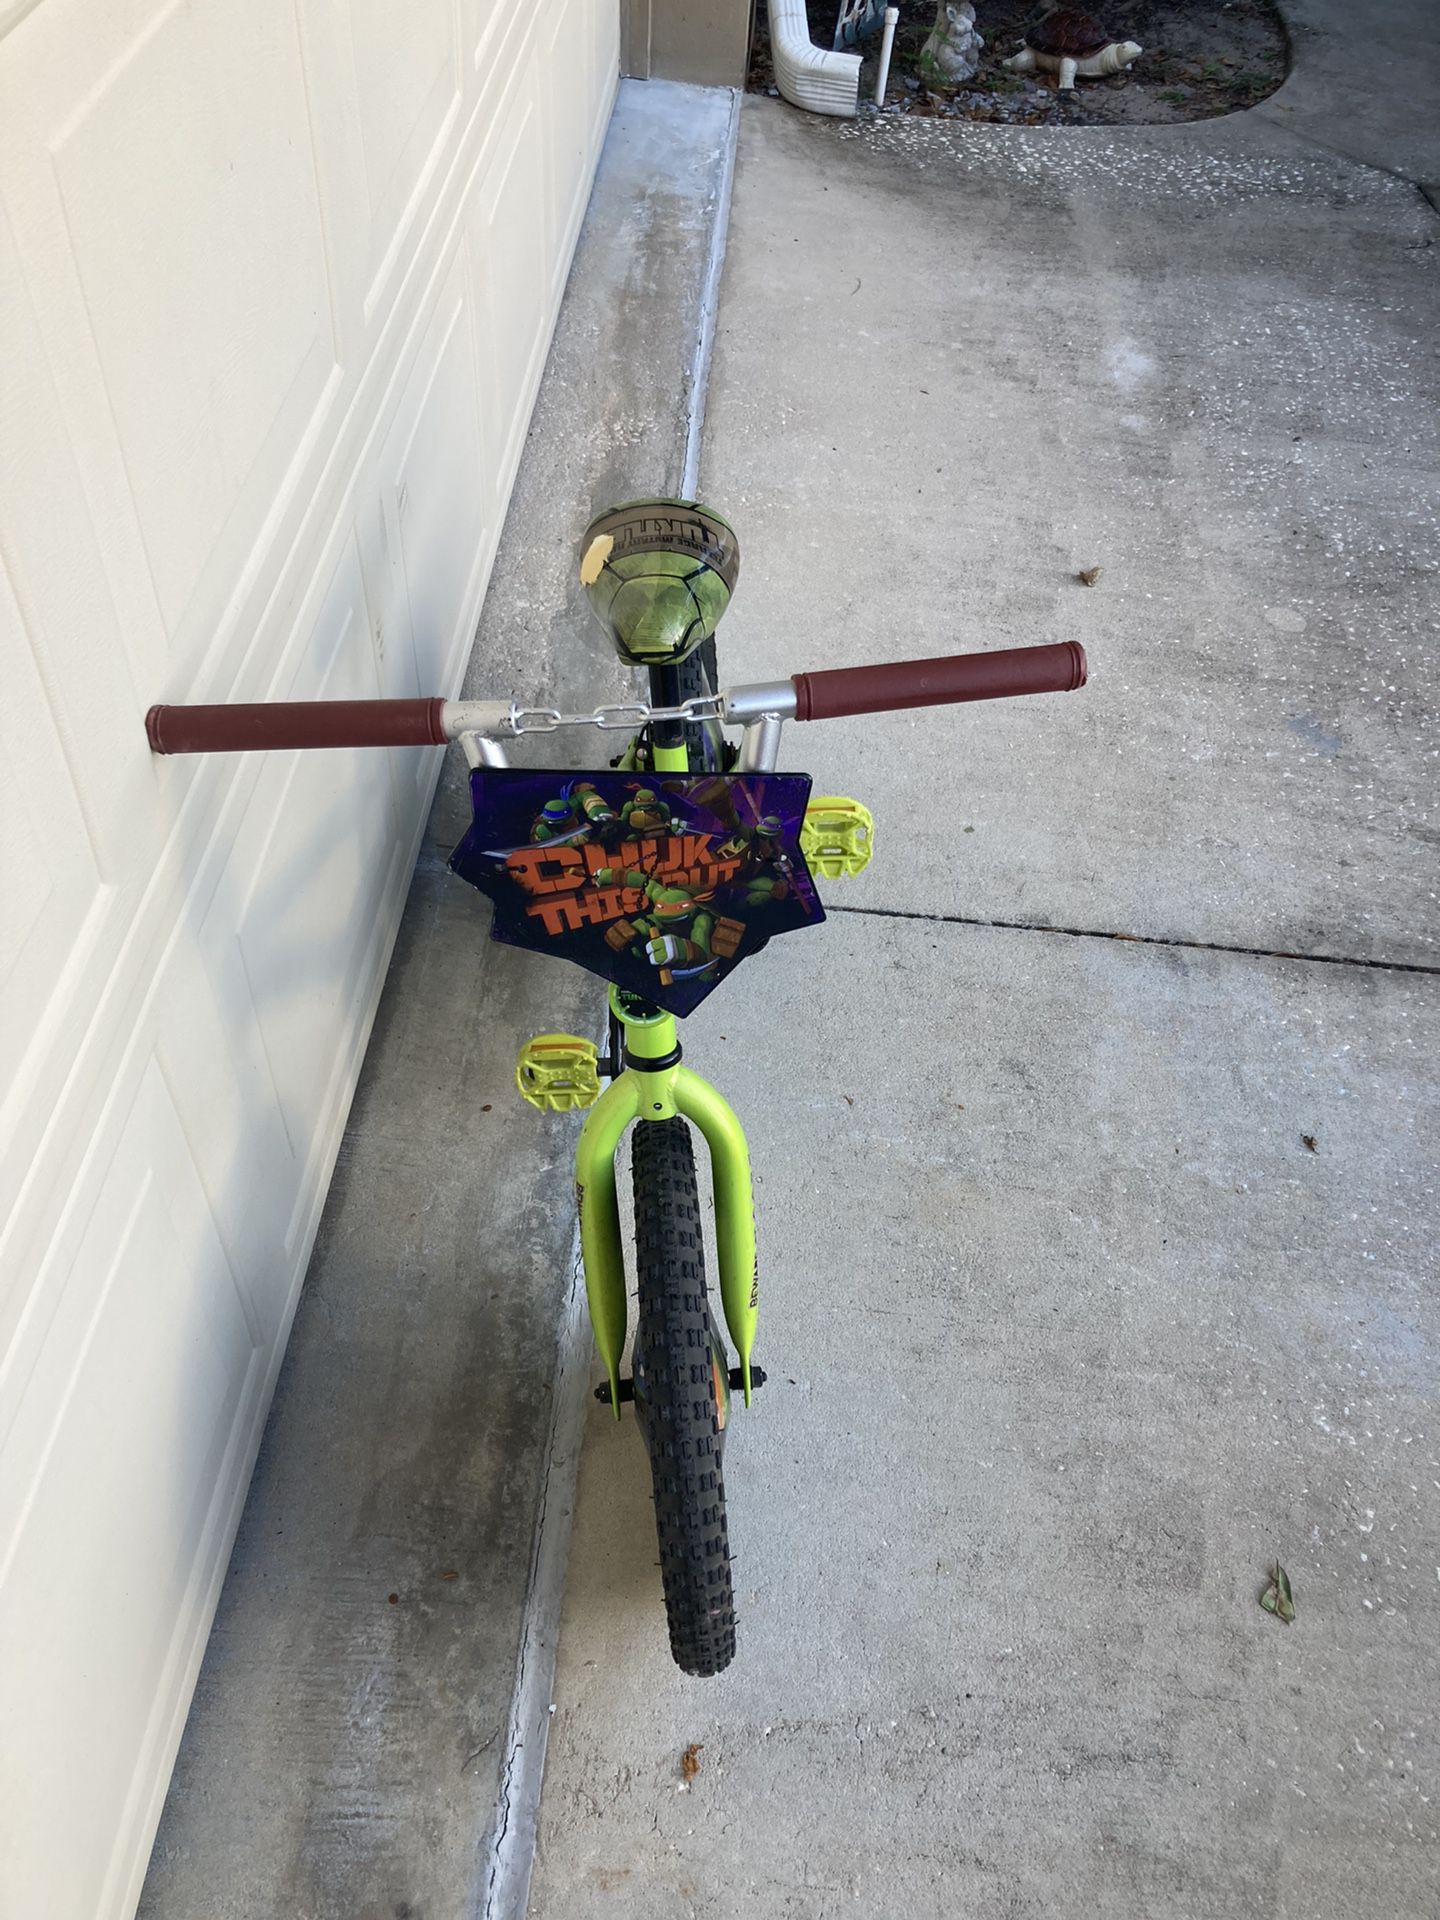 Teenage Mutant Ninja Turtles Kids Bike Bicycle 